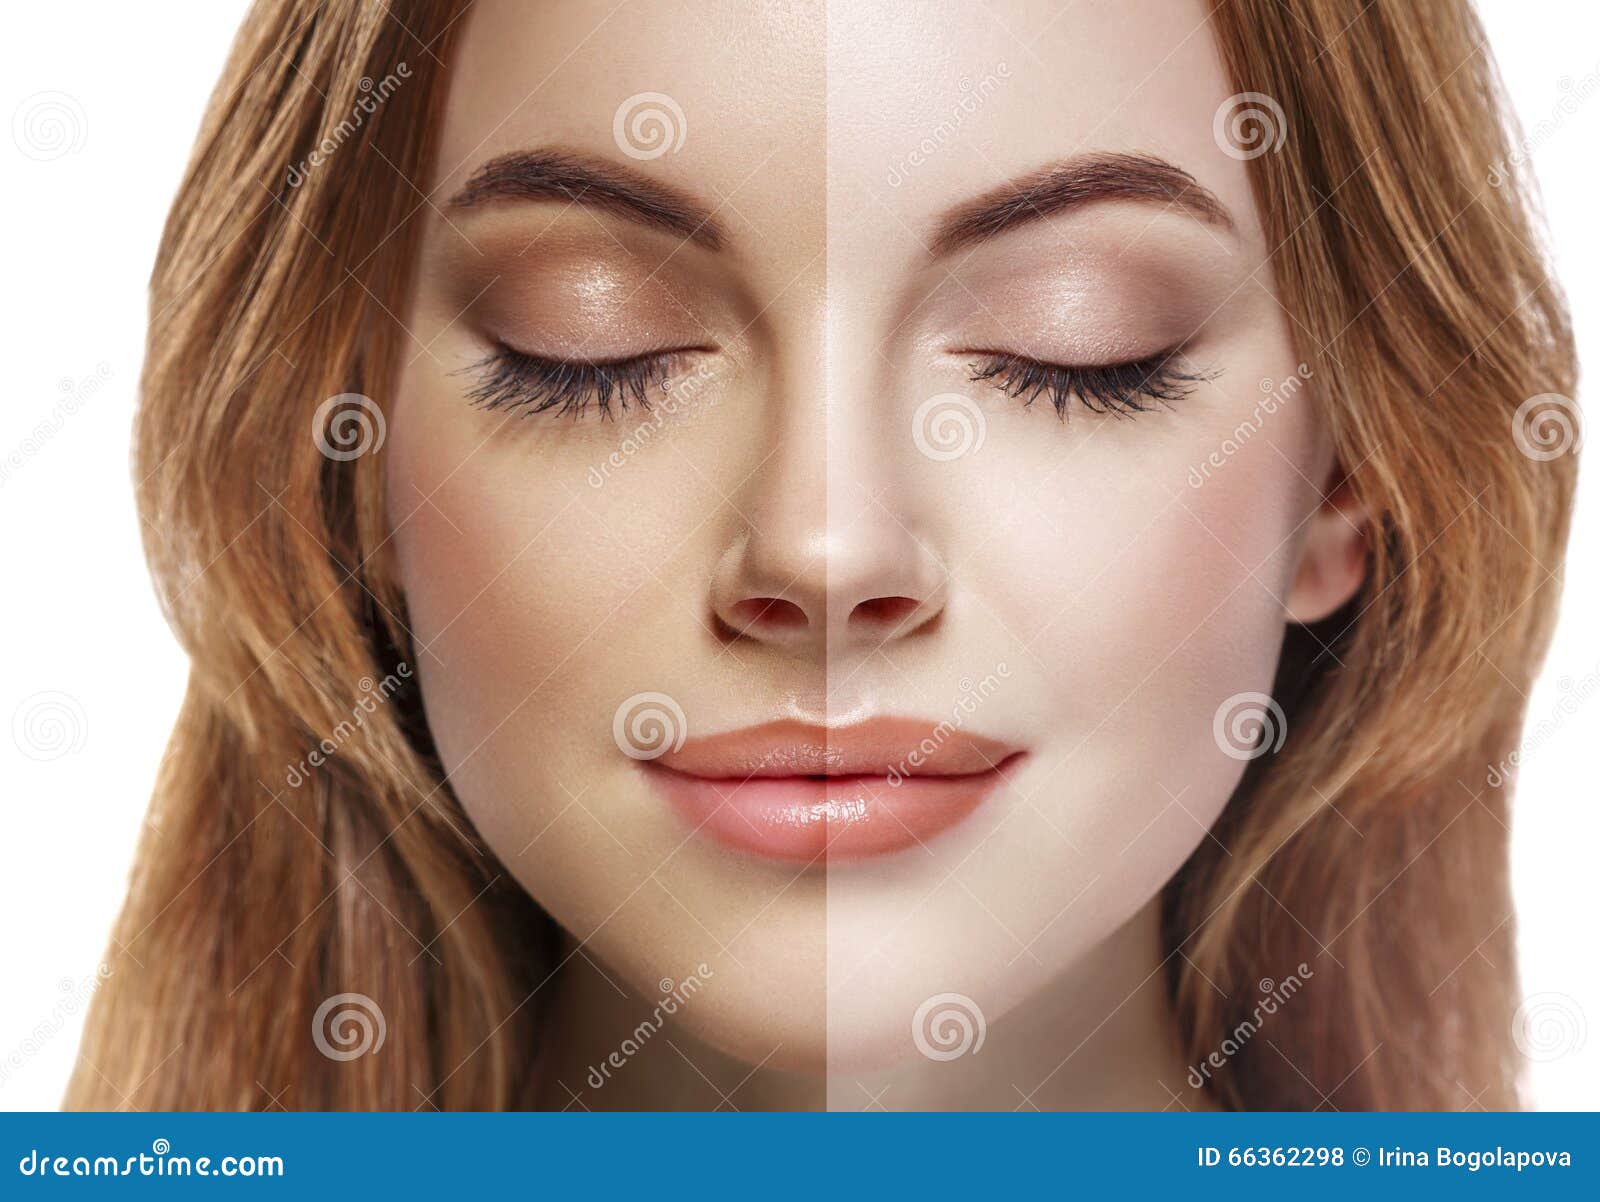 woman tan half face beautiful portrait spray